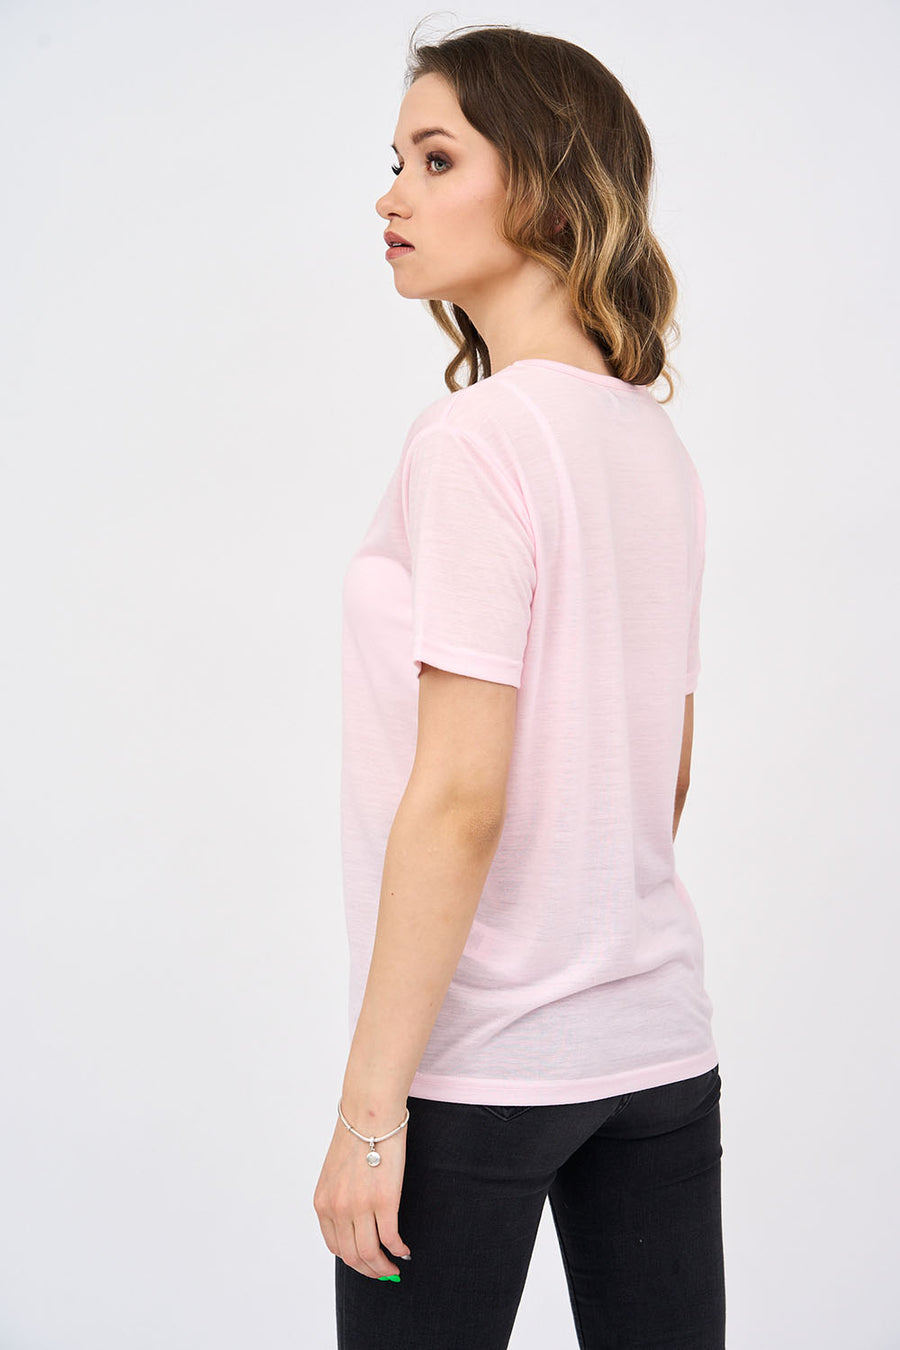 Short-Sleeved V Neck Women's T Shirt in Baby Pink